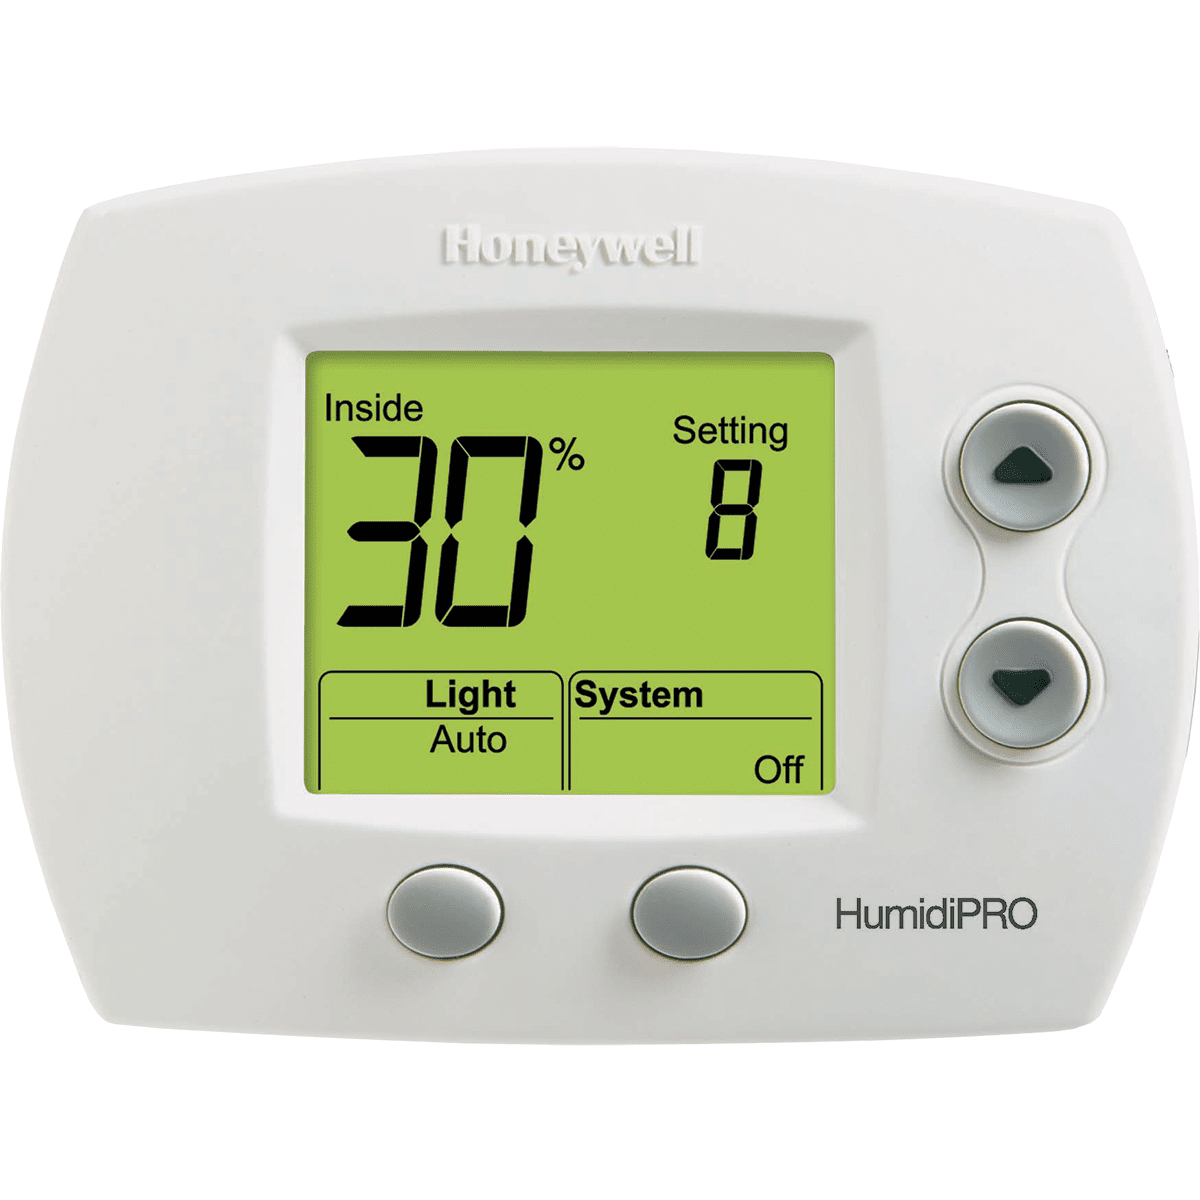 Honeywell HumidiPRO Digital Humidity Control (H6062A1000)